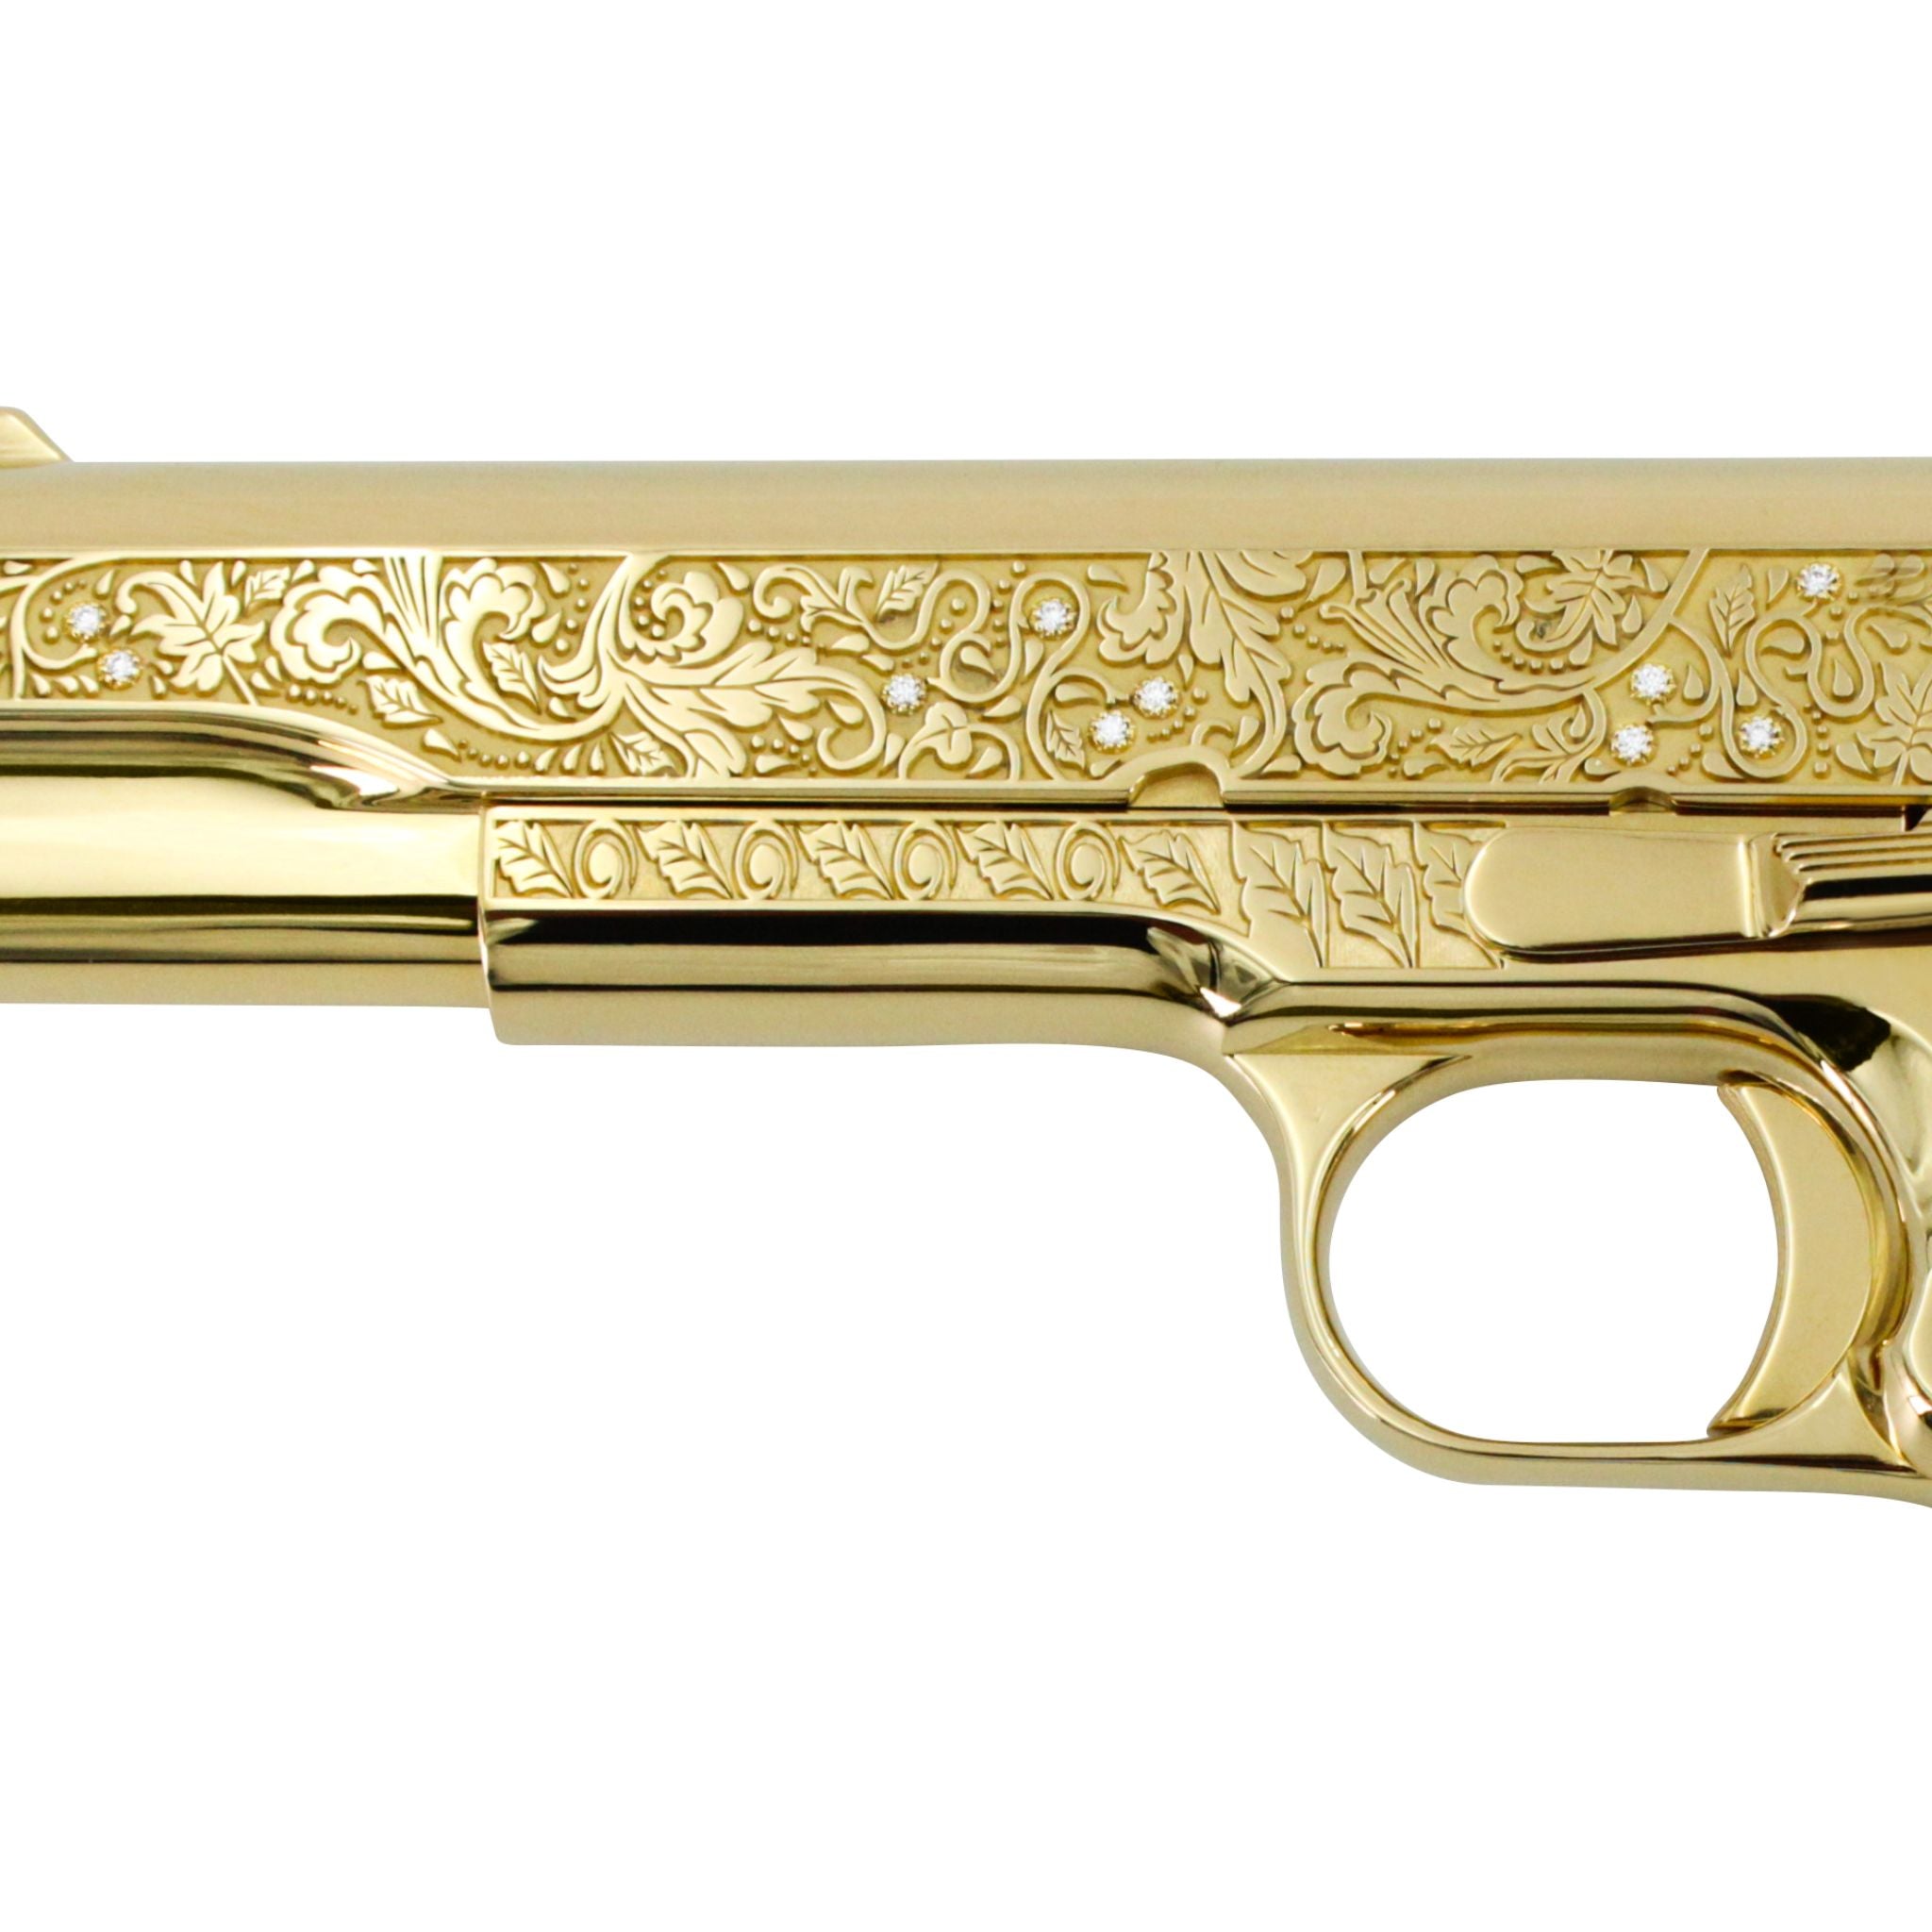 Colt 1911 Government, 45 ACP, Vine & Berries Design With Diamonds, 24 karat Gold Plated, Engraved, 24 karat Gold Gun, 4346038517862